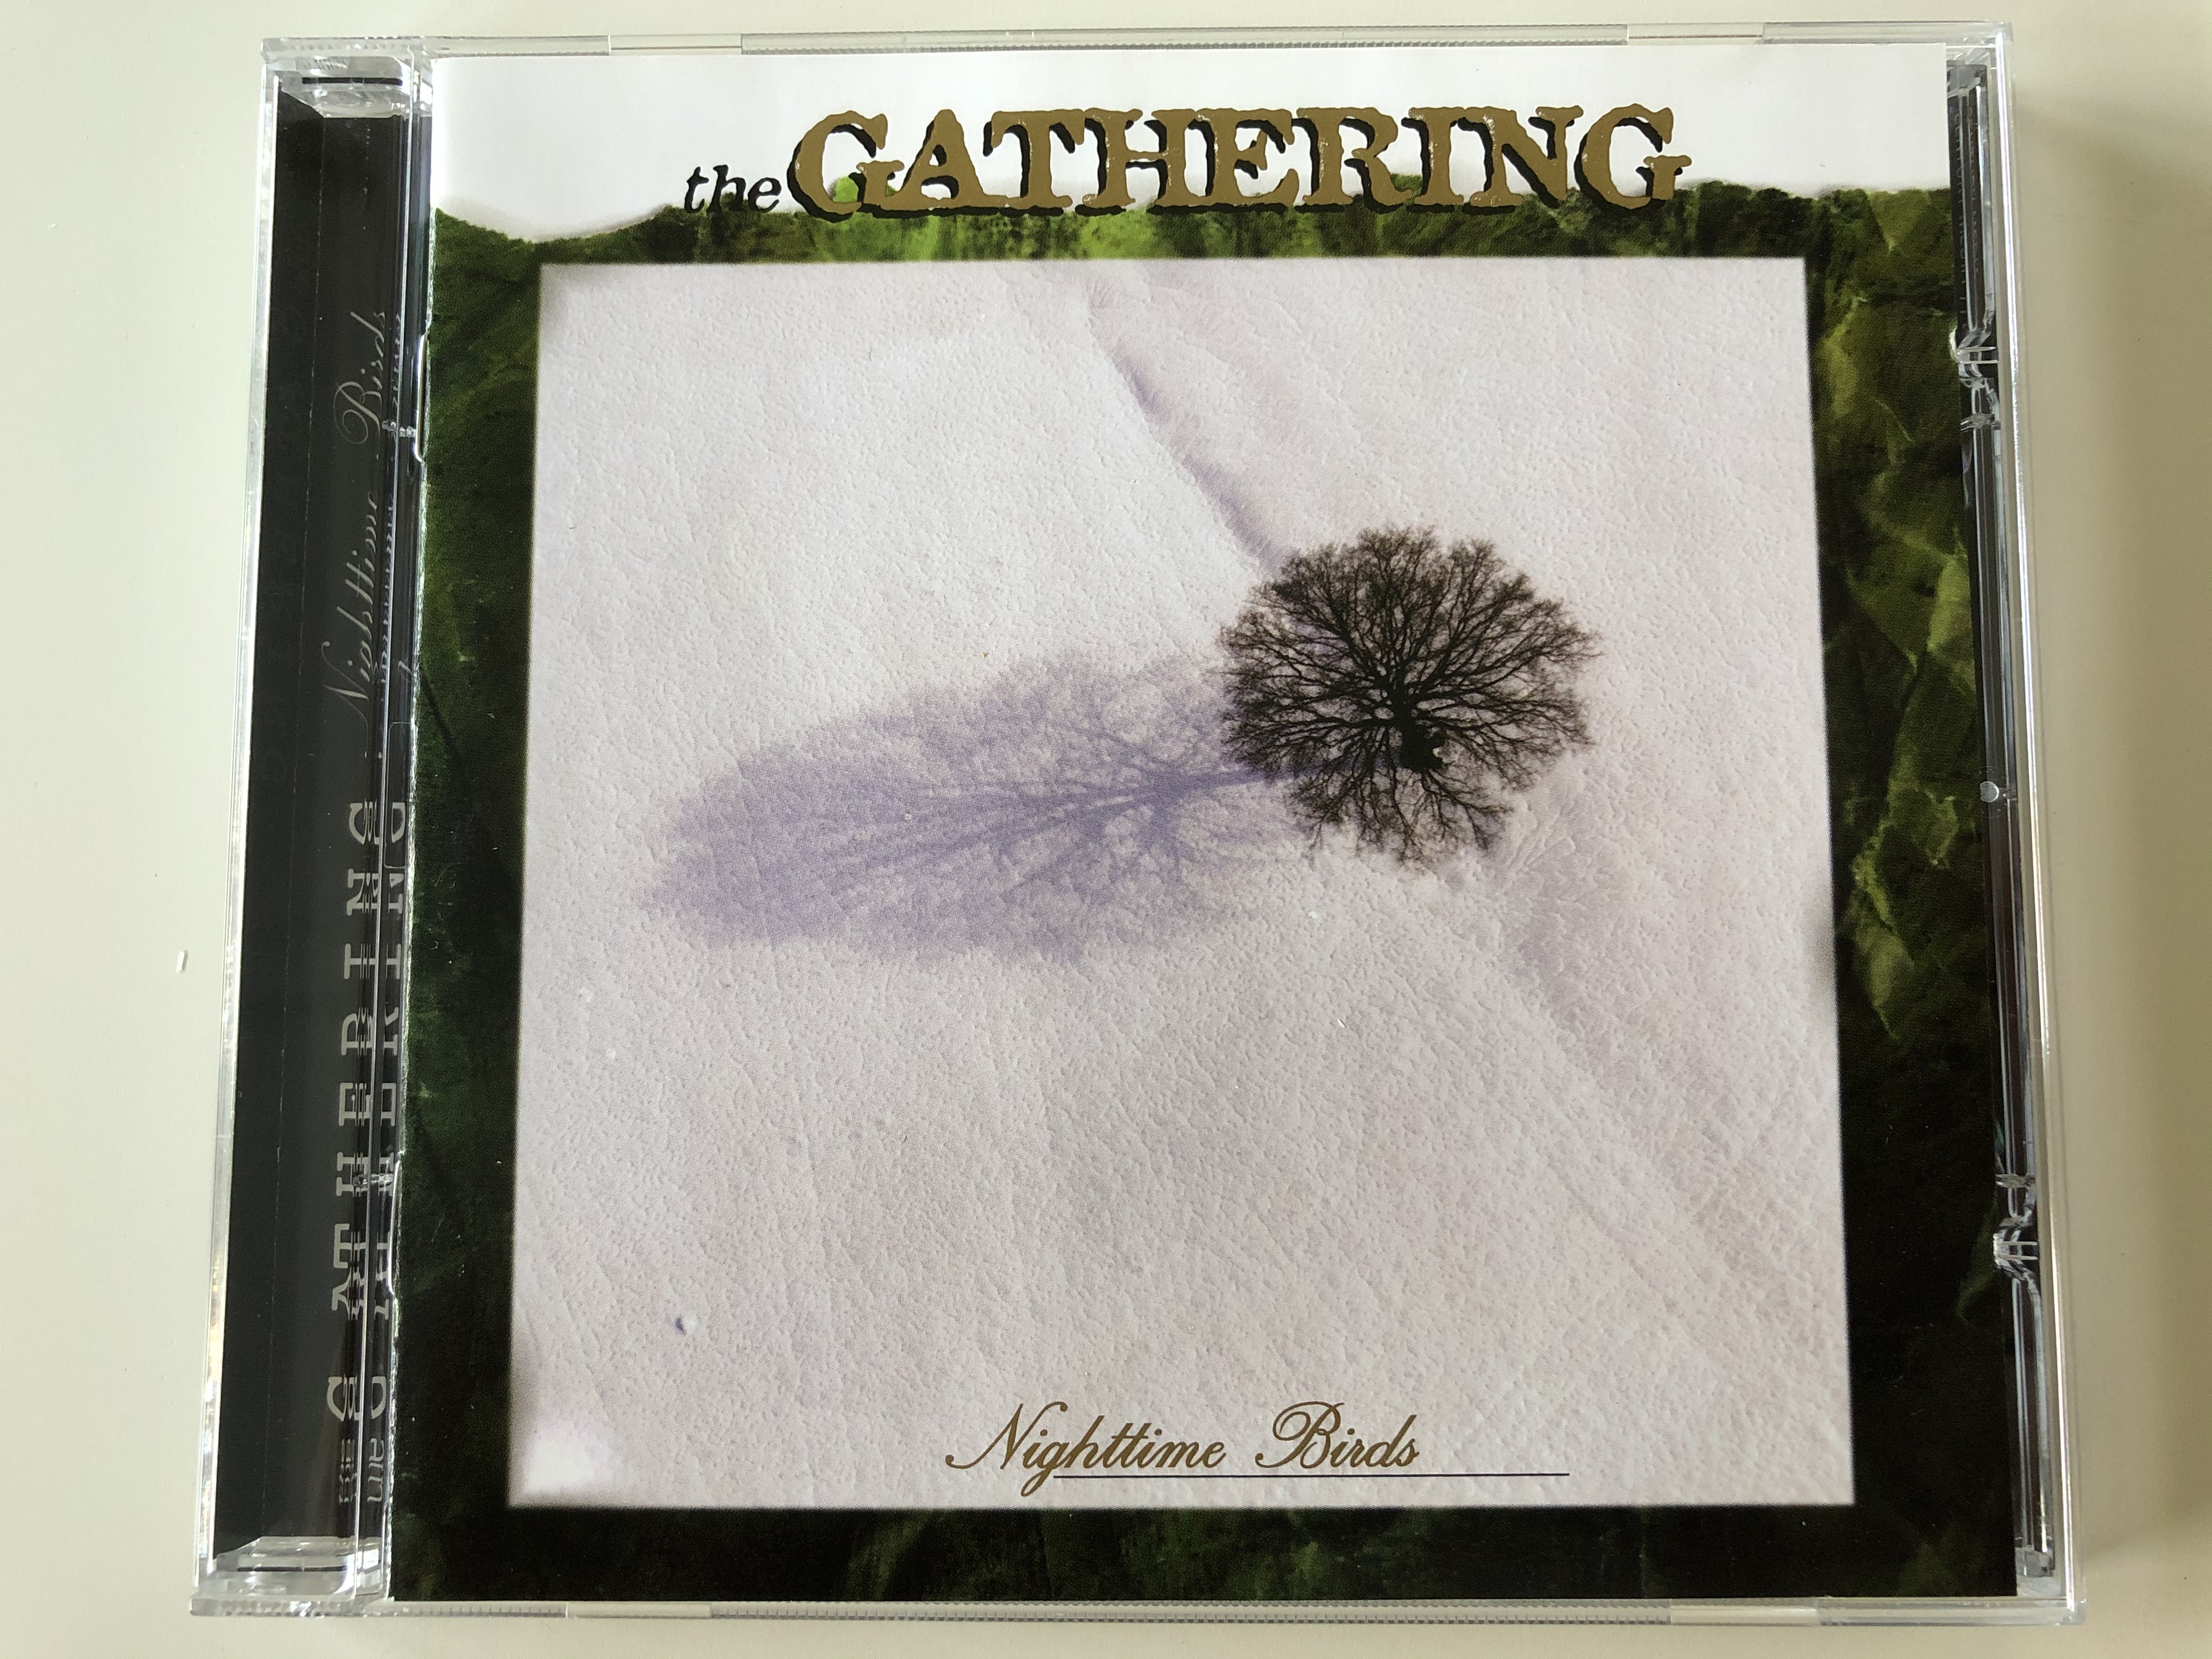 the-gathering-nighttime-birds-century-media-audio-cd-1997-77168-2-1-.jpg